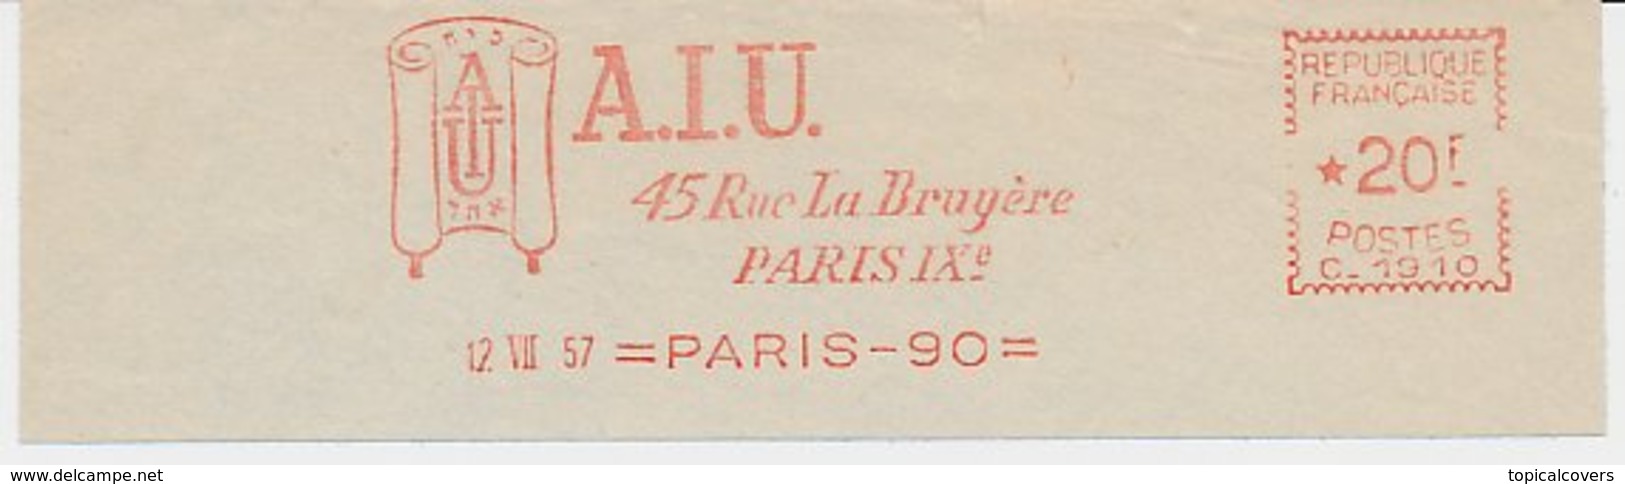 Meter Cut France 1957 A.I.U. - Israelite Universal Alliance - Scroll - Book - Unclassified